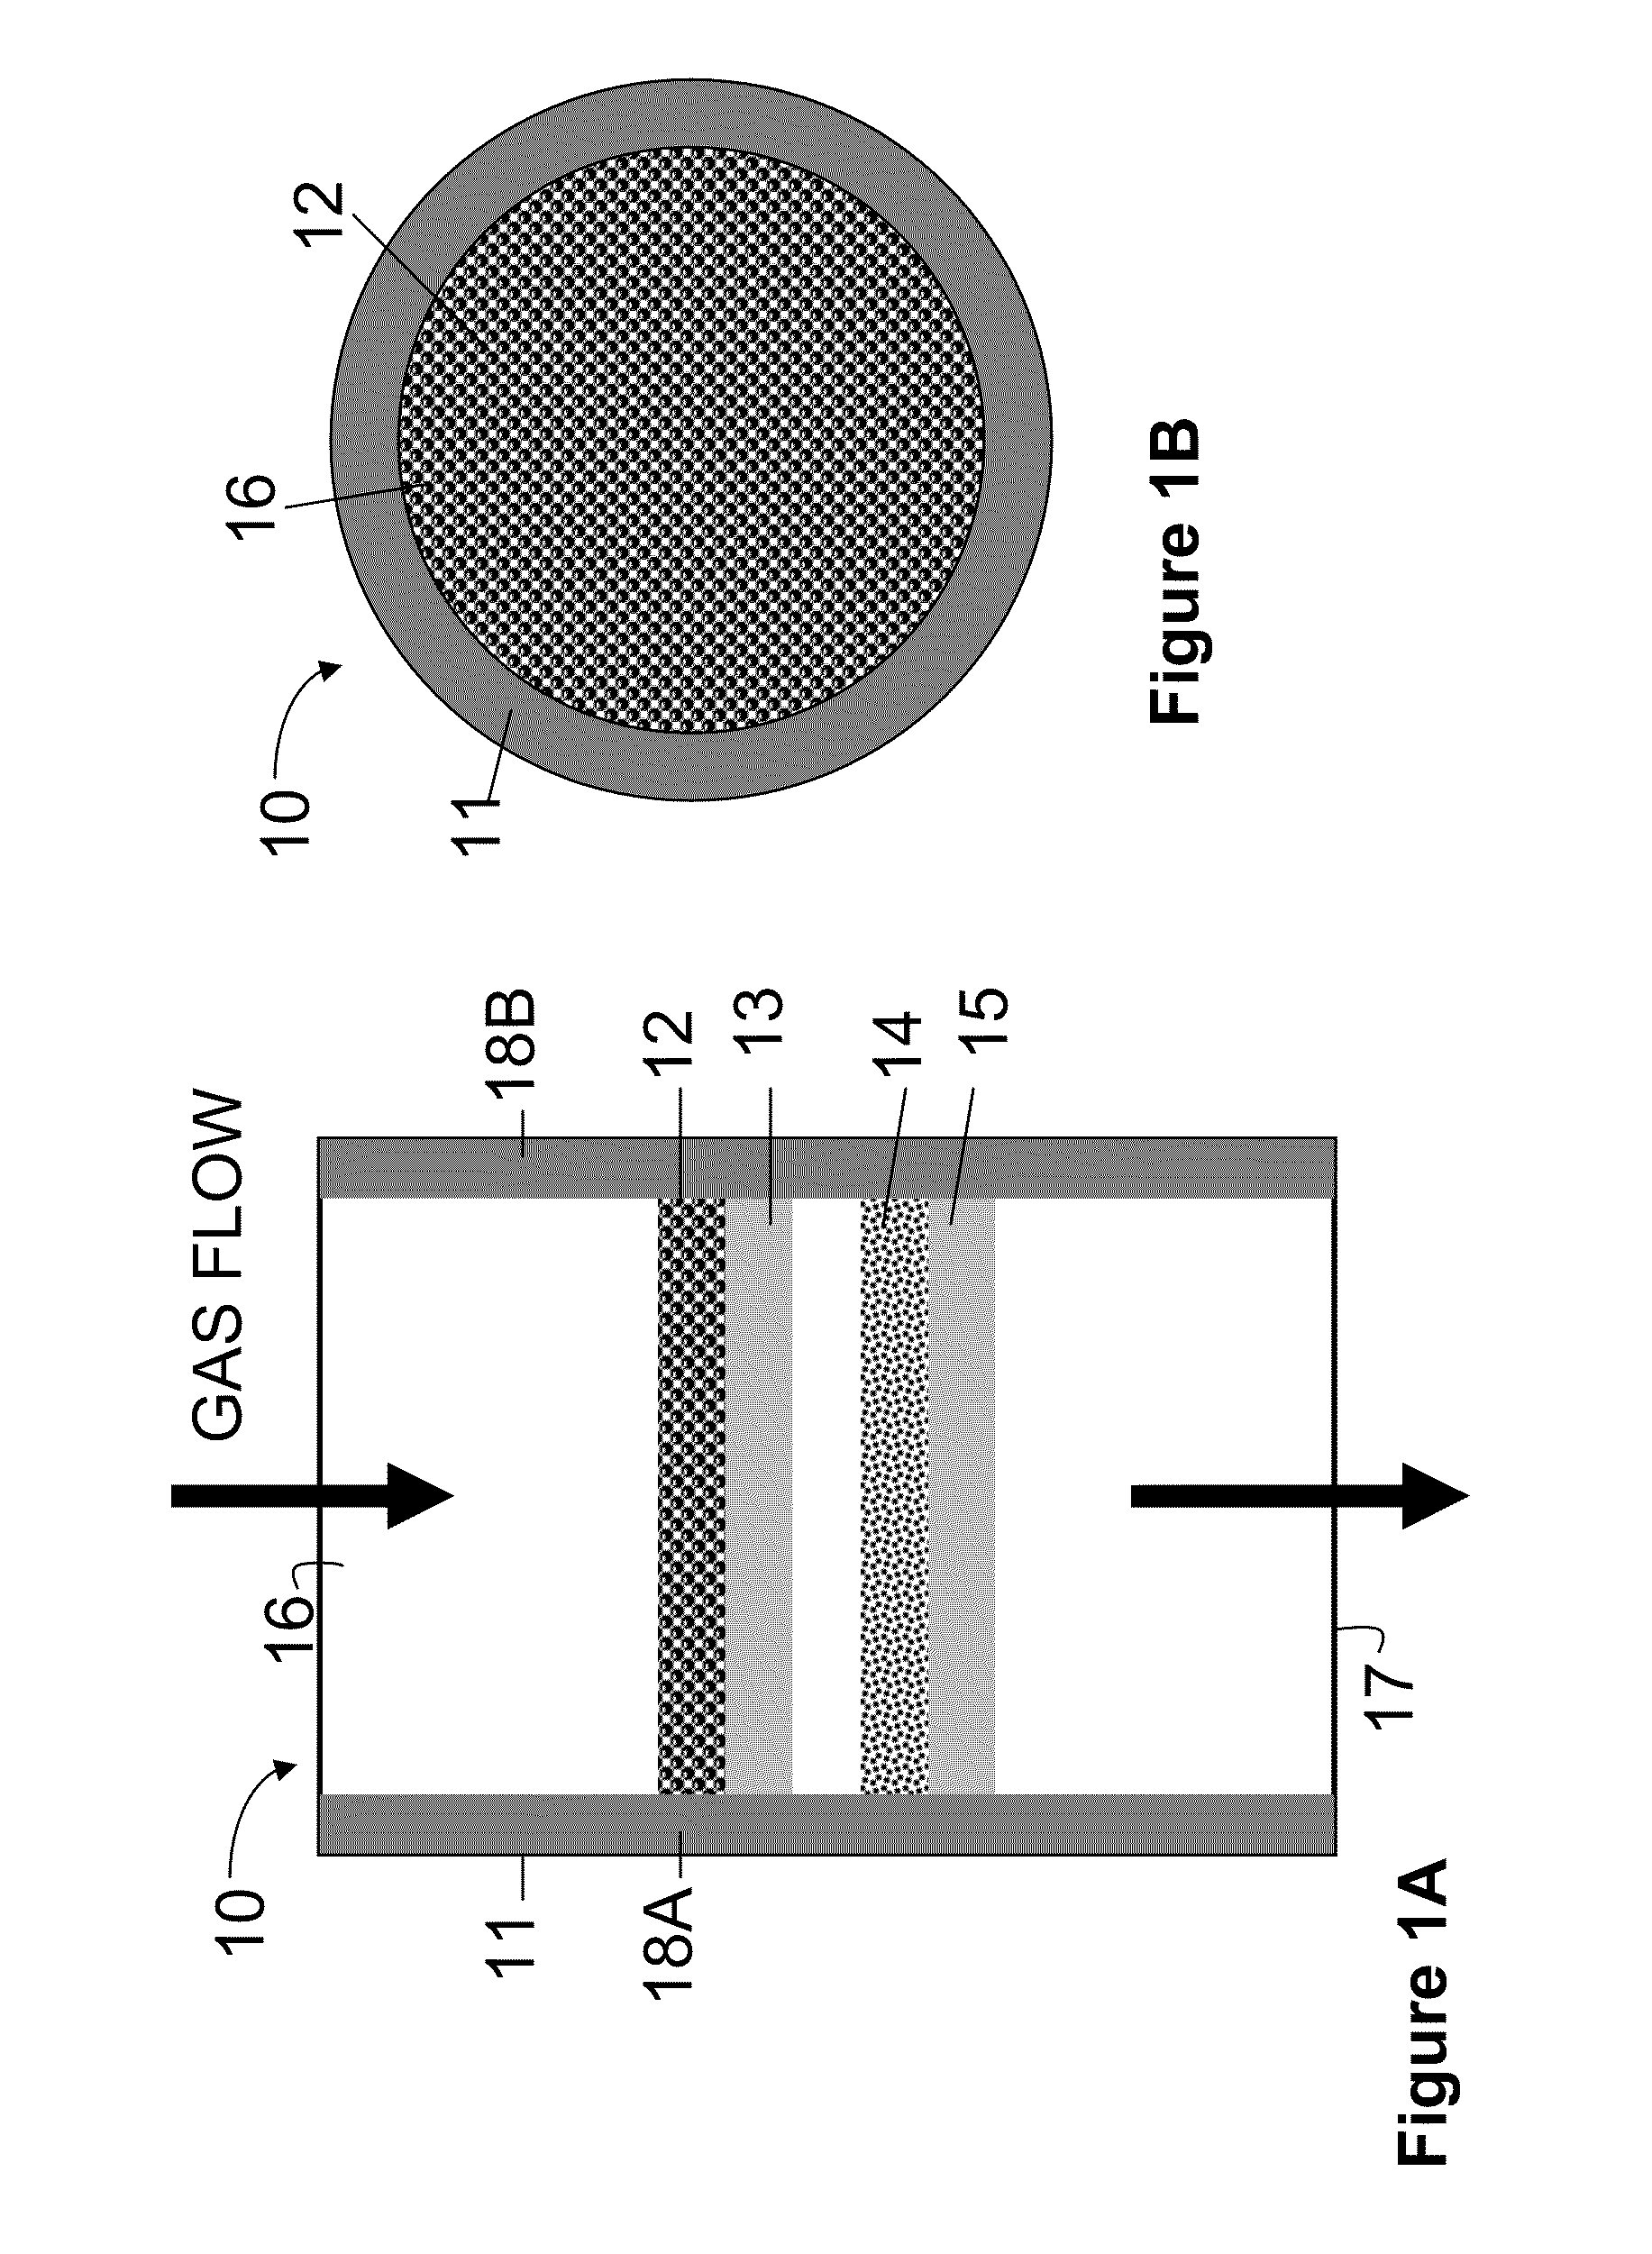 Desulfurization apparatus and method